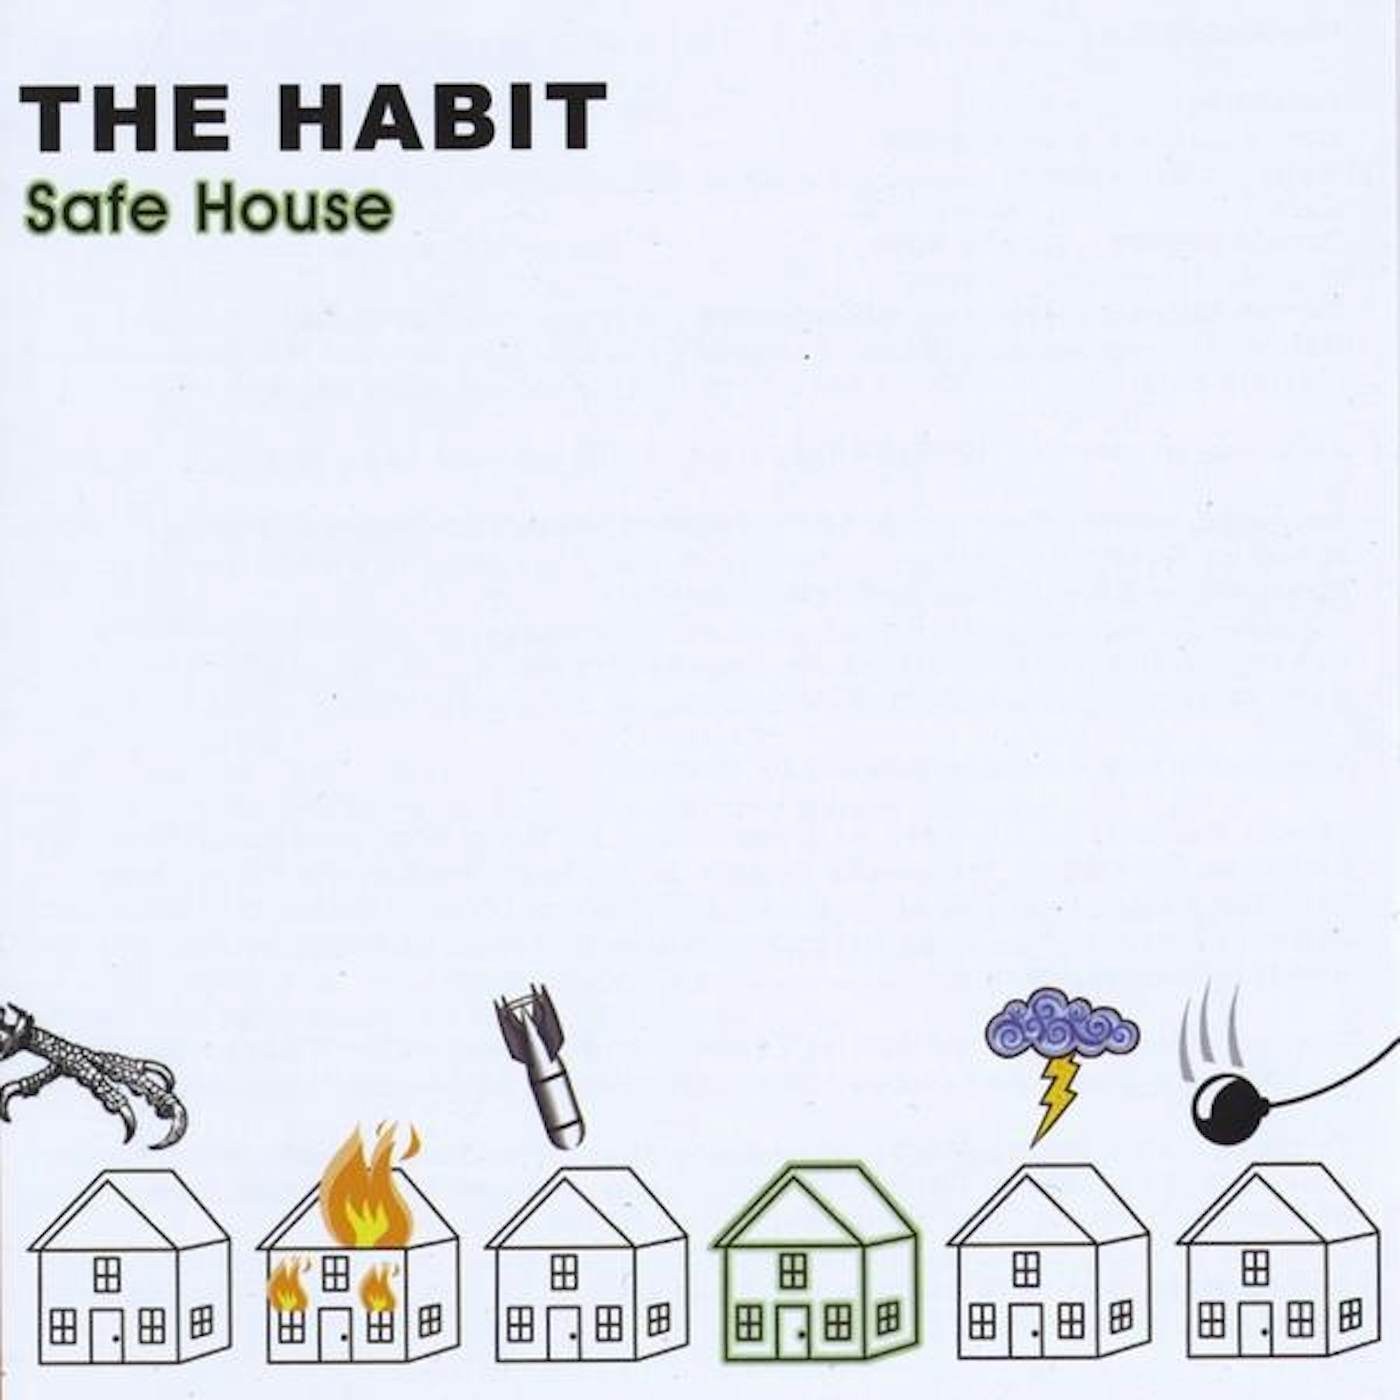 The Habit SAFE HOUSE CD